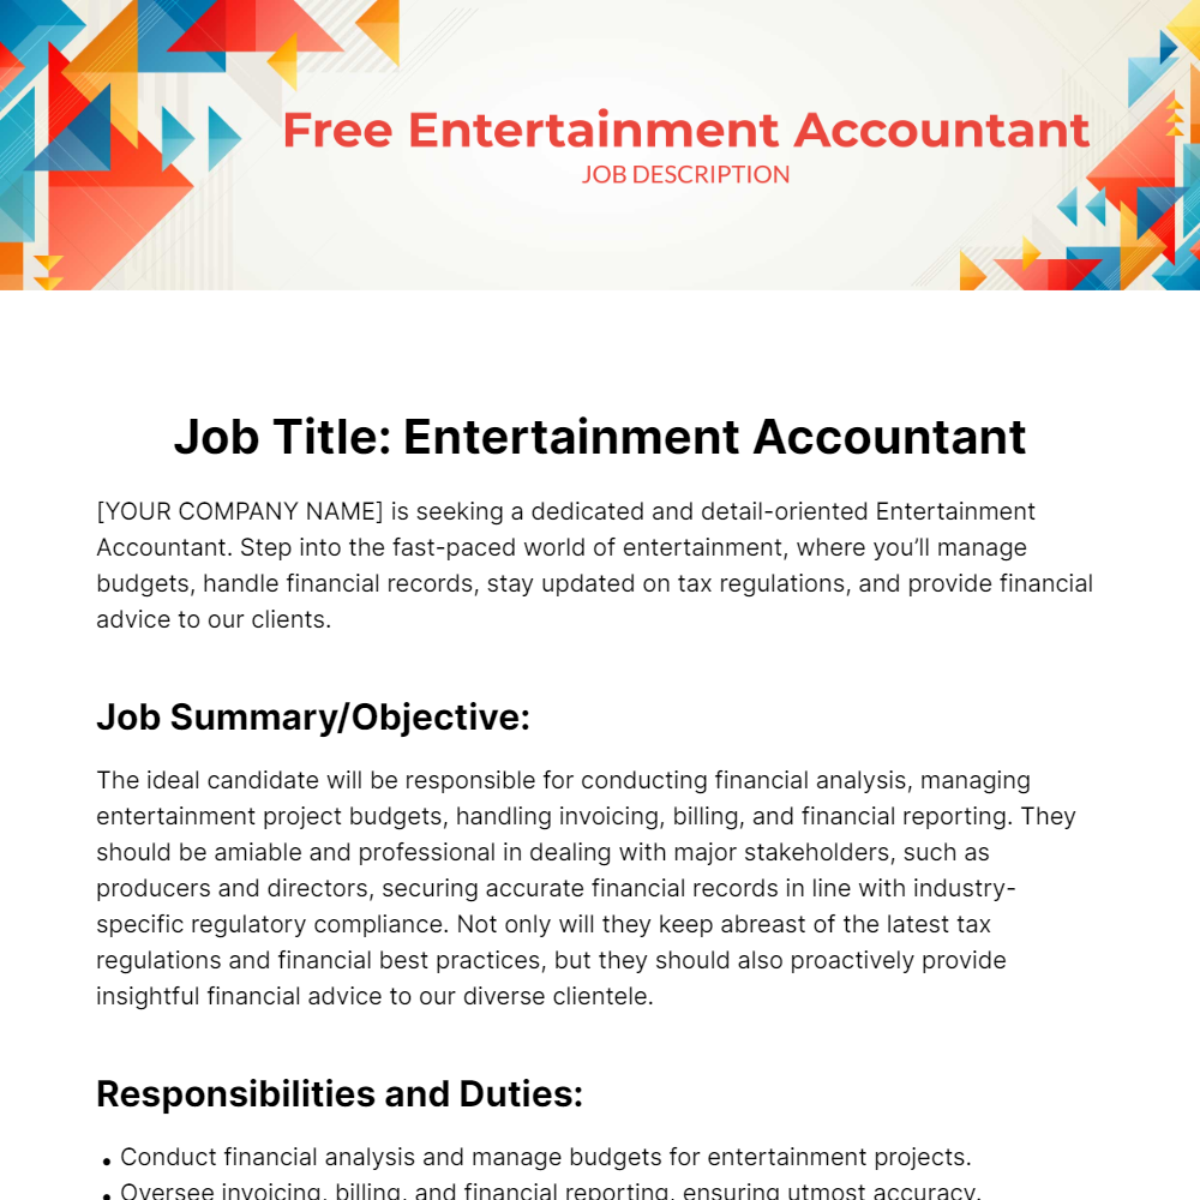 Free Entertainment Accountant Job Description Template